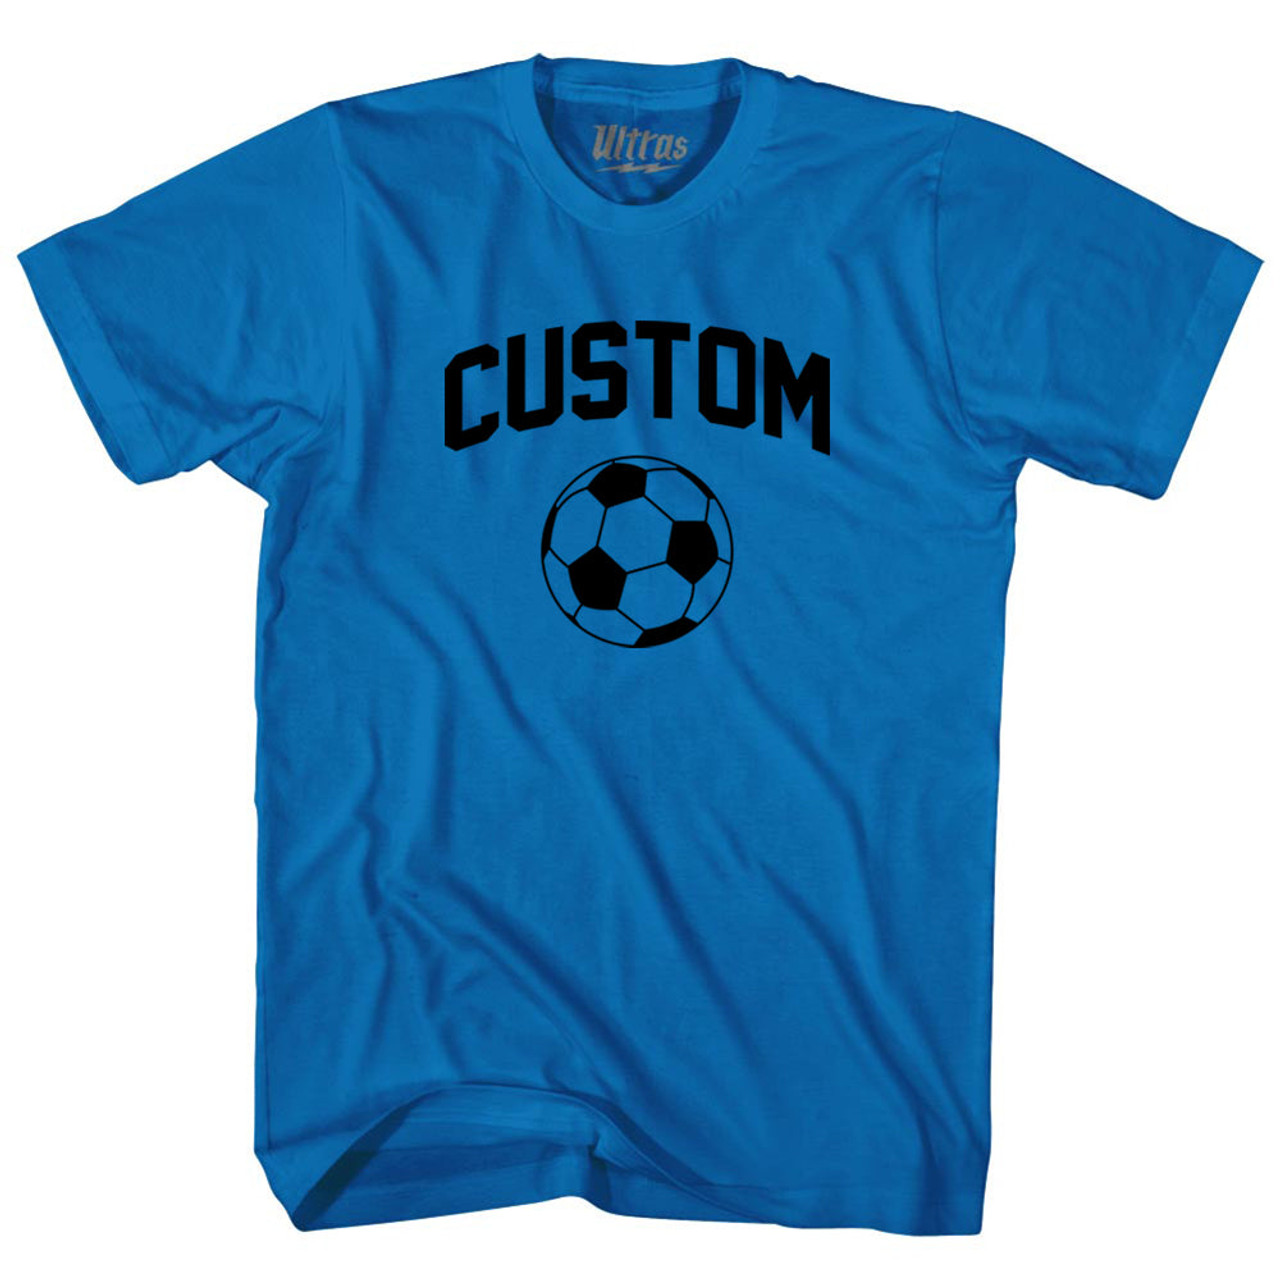 Ball Adult Cotton T-shirt Royal Blue